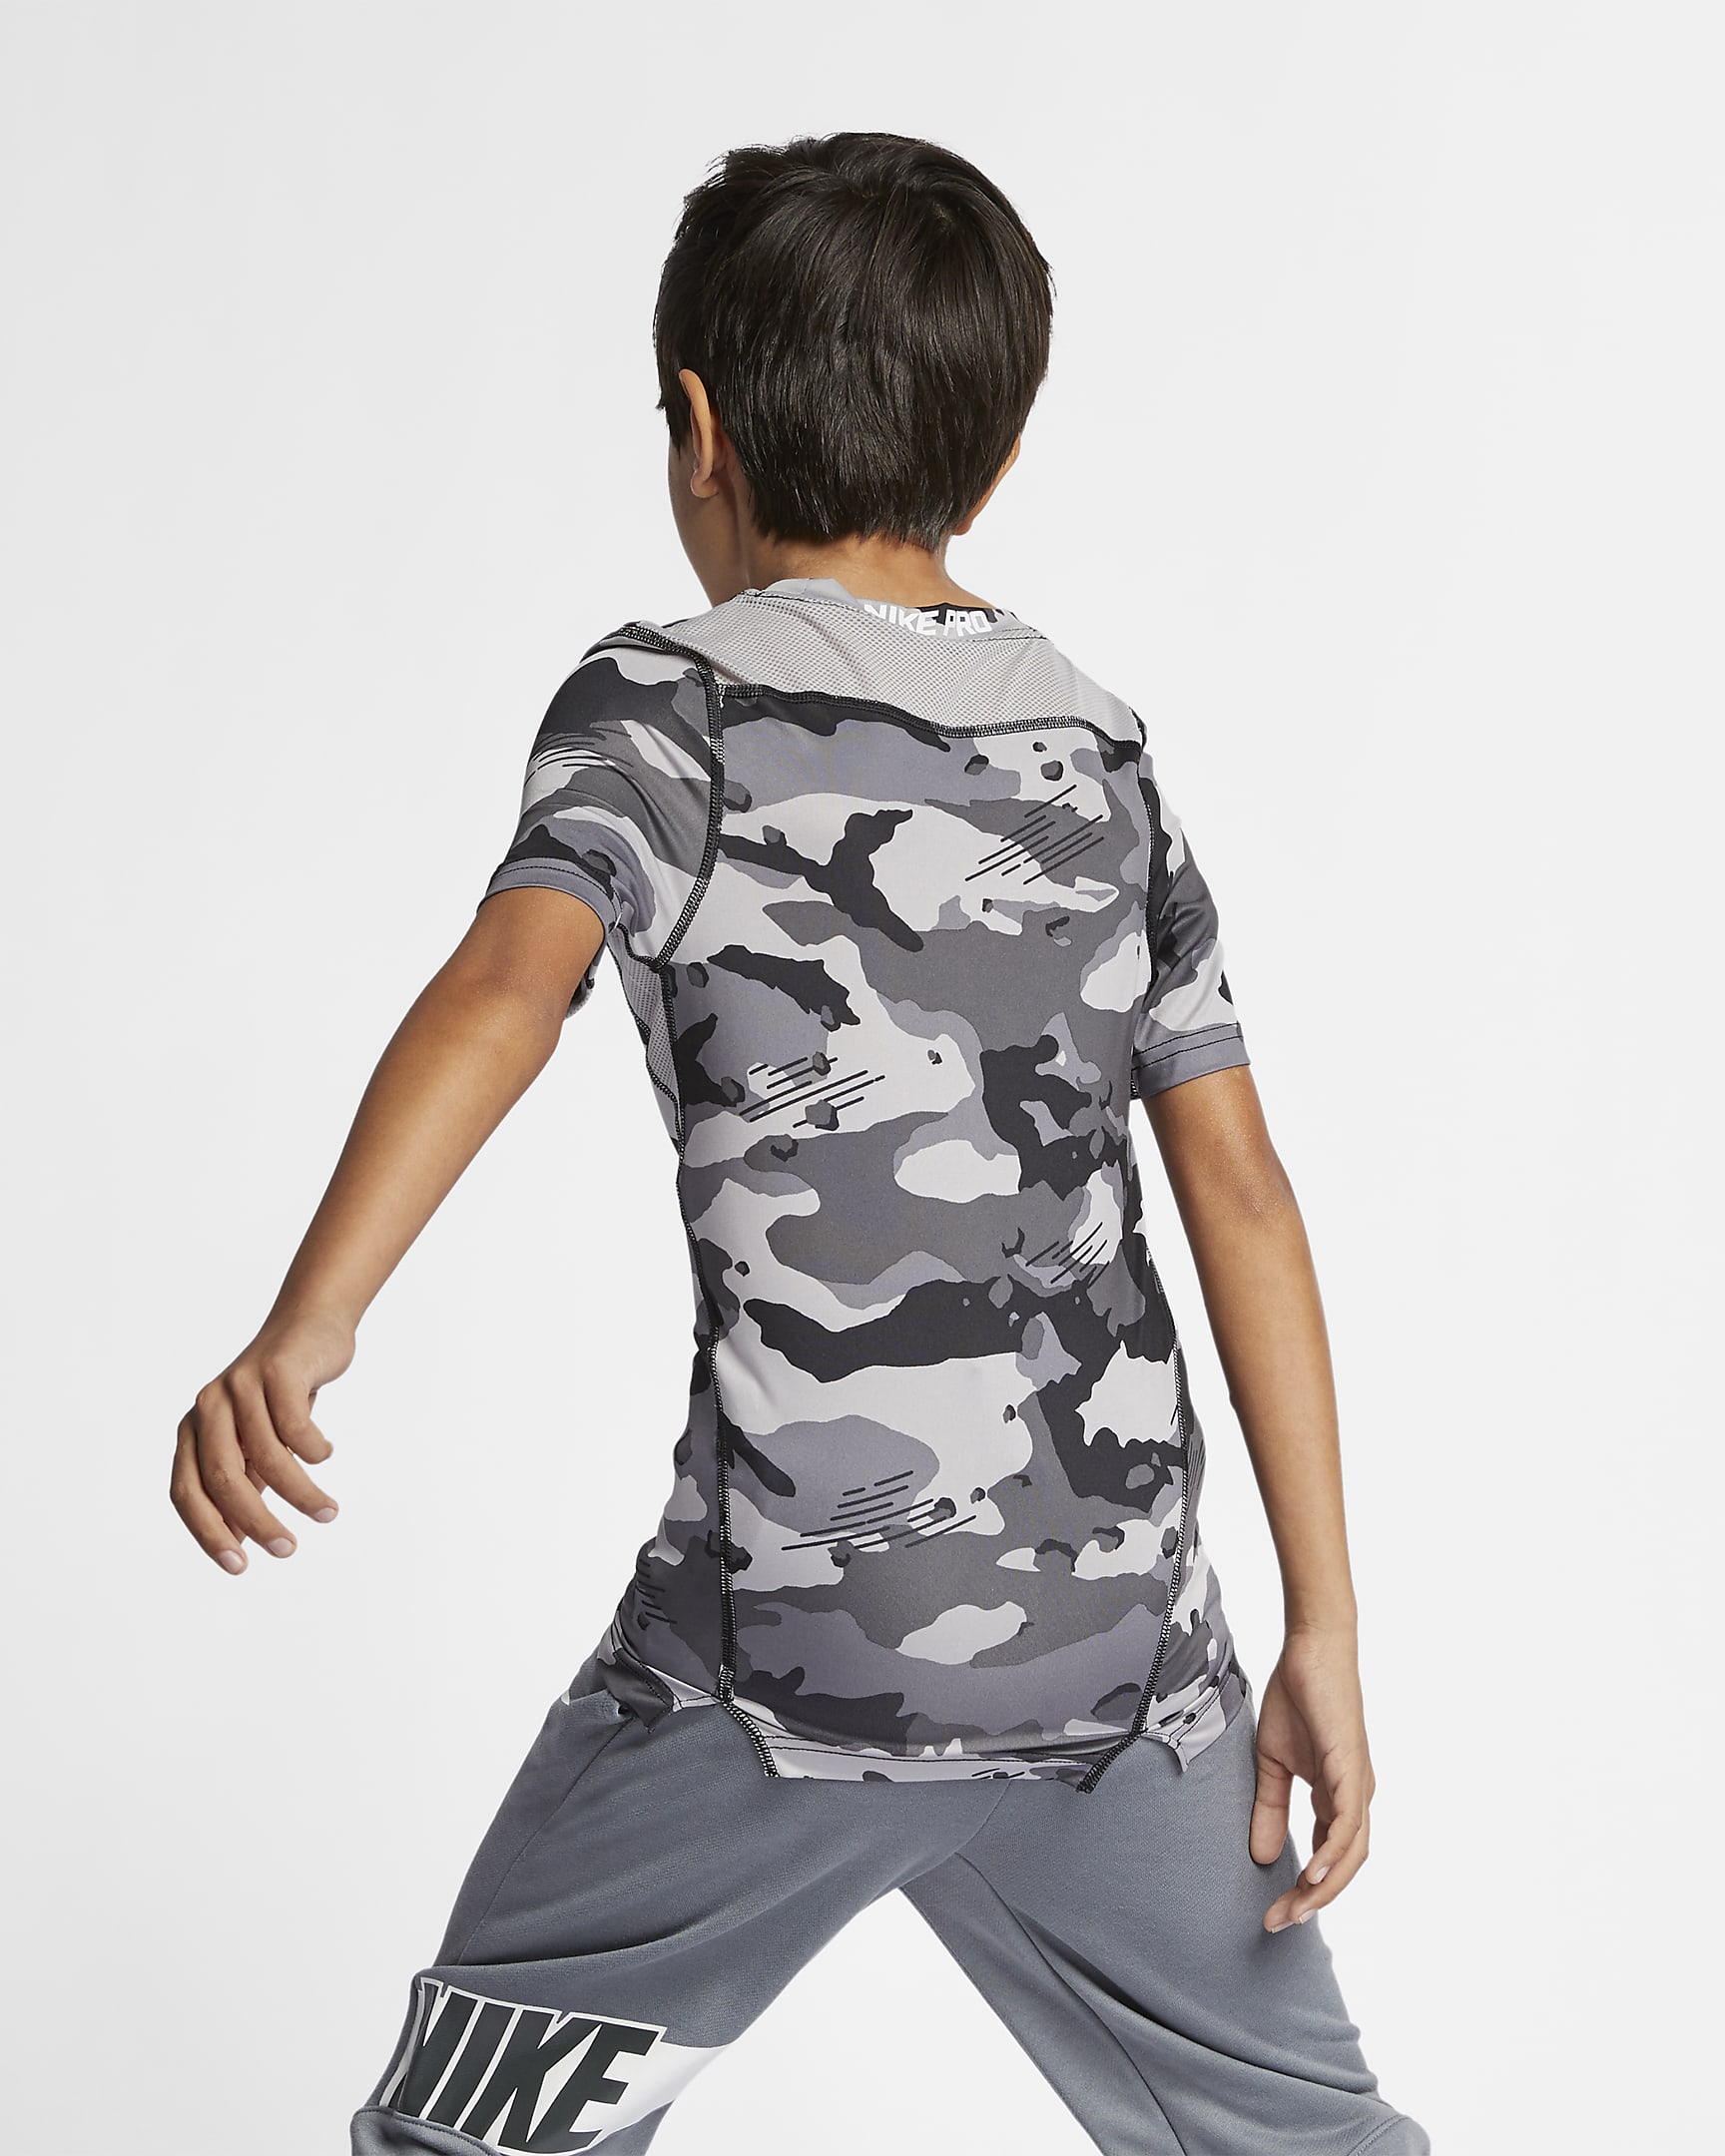 Nike Pro Boys' Short-Sleeve Camo Top. Nike IL